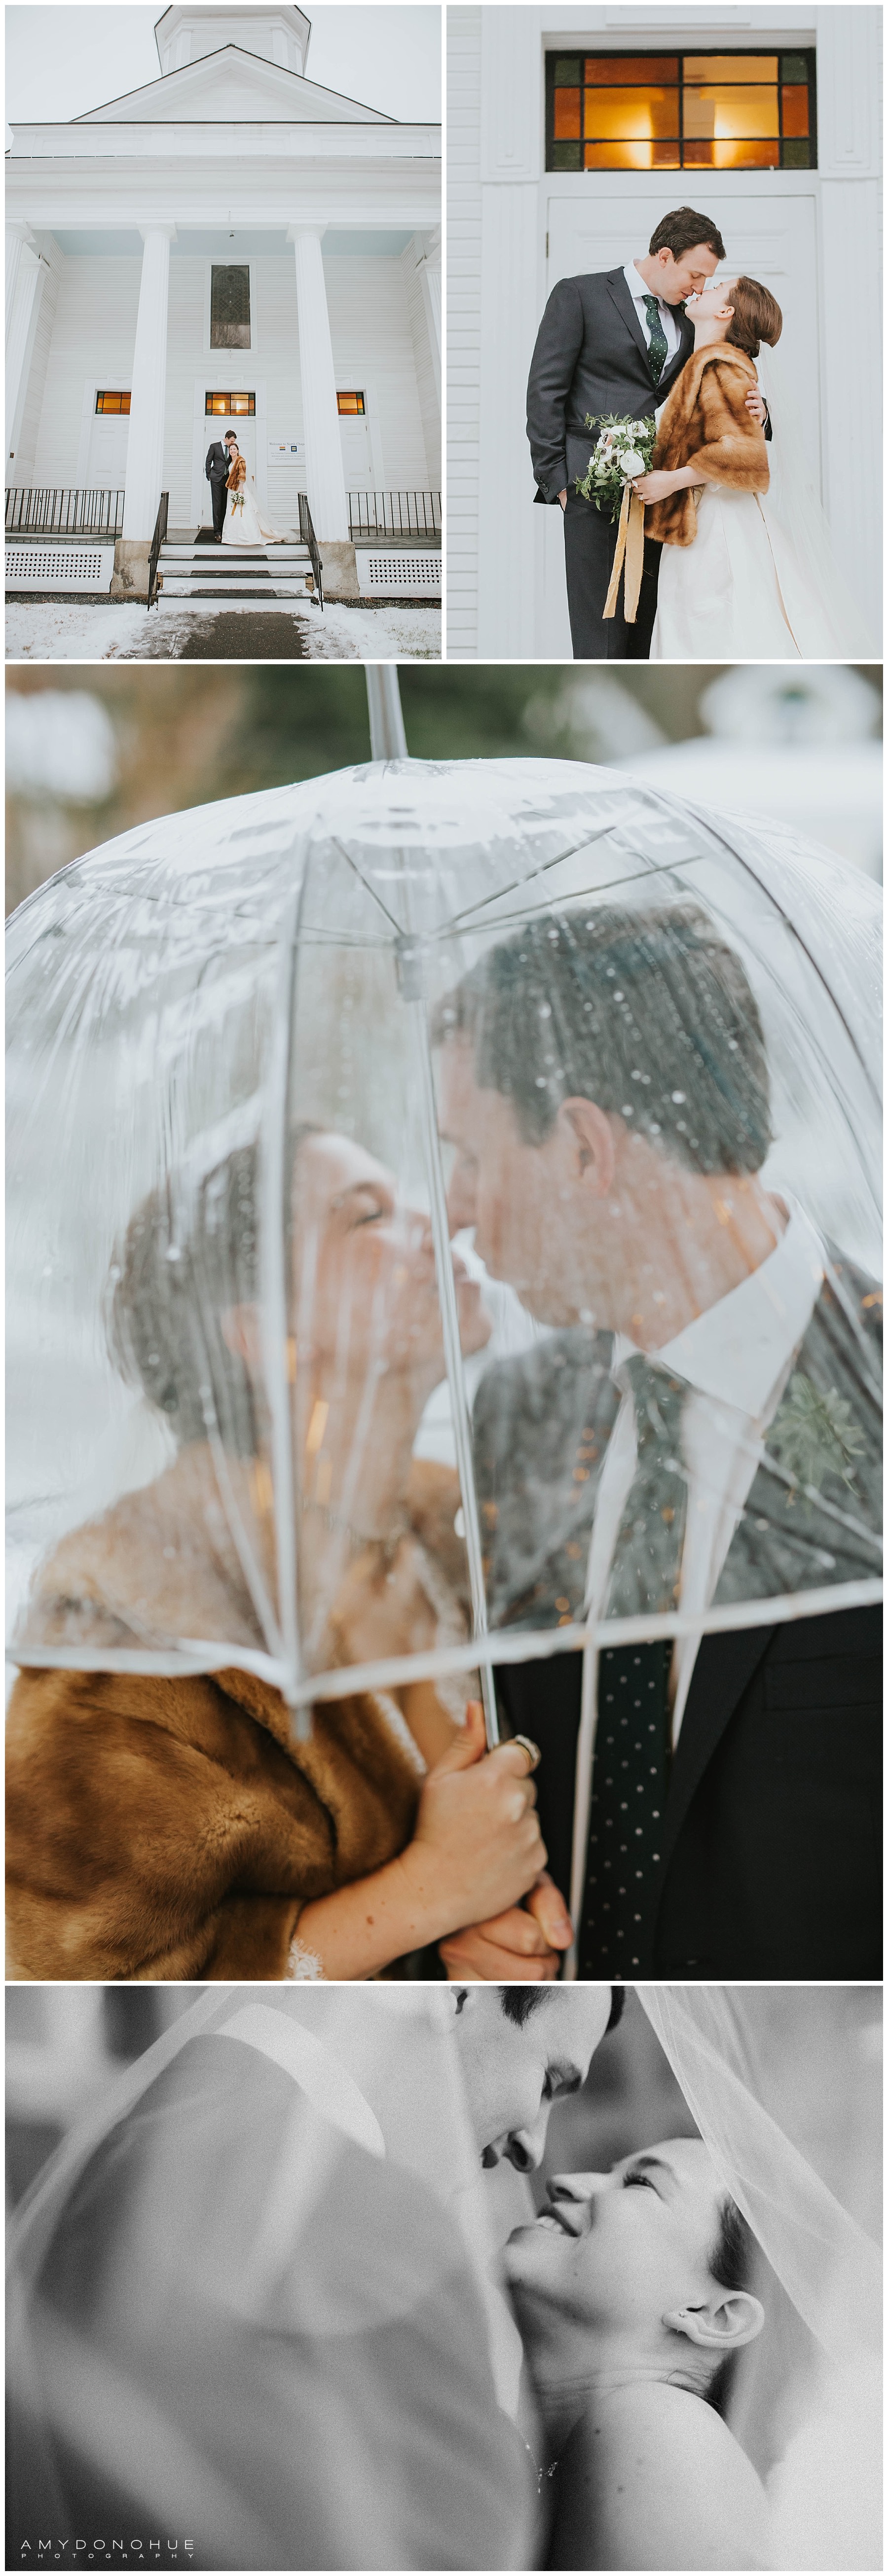 Rainy Day Bride and Groom Portraits | Woodstock, Vermont Wedding Photographer | © Amy Donohue Photography